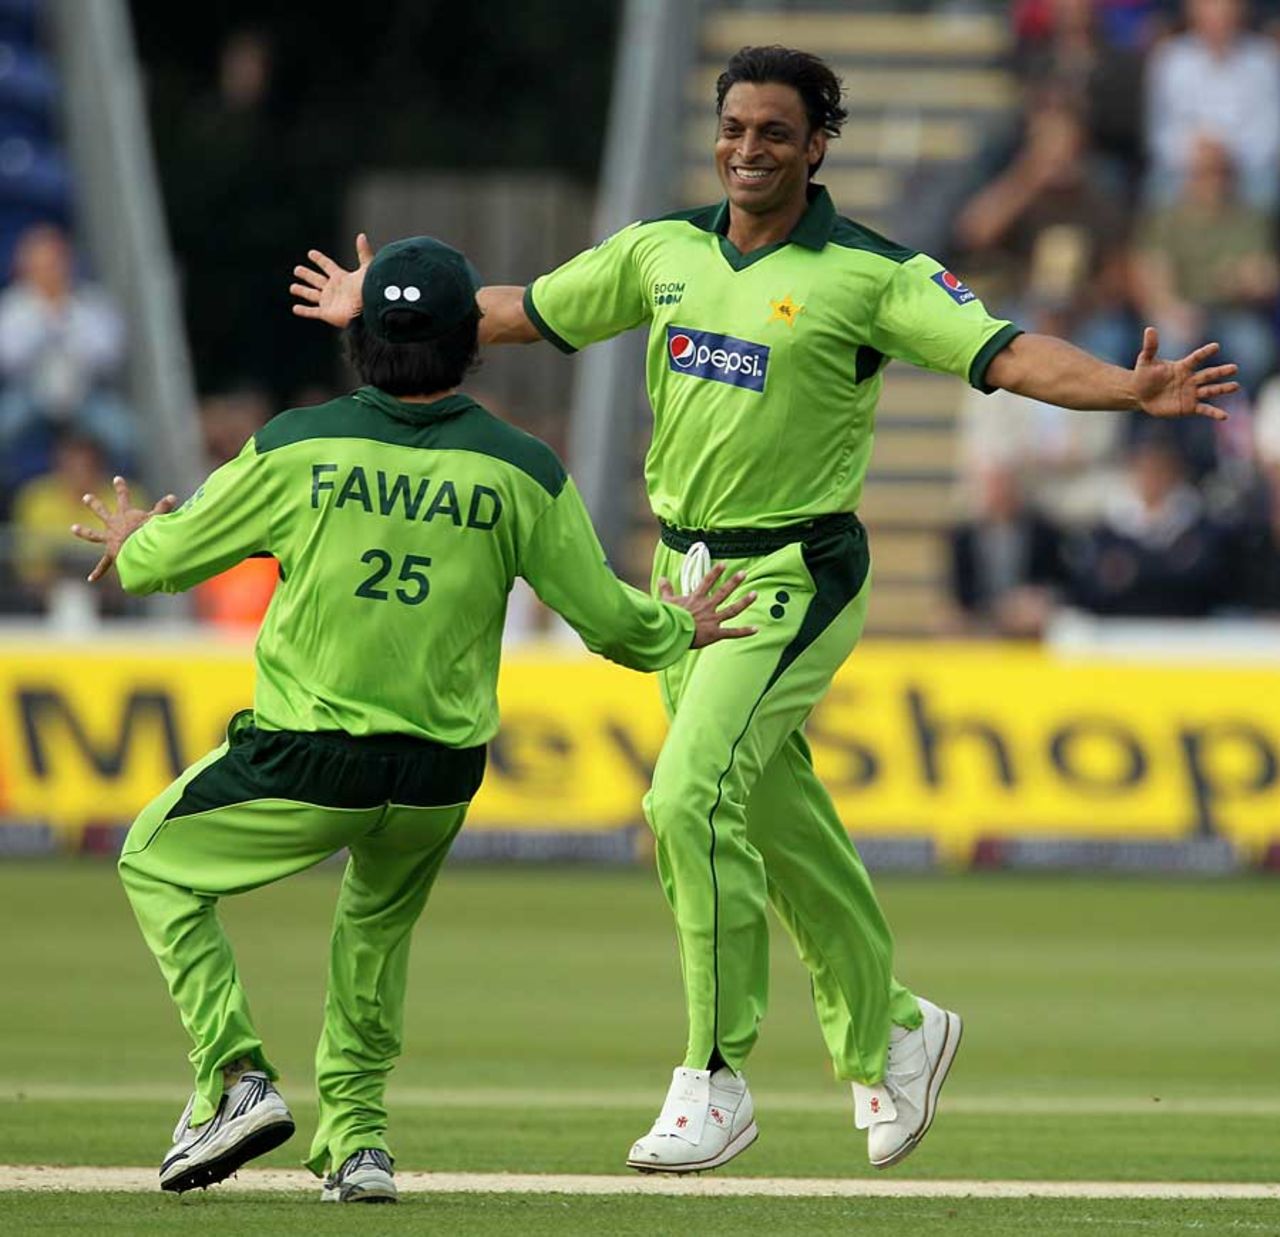 Shoaib Akhtar struck early to remove Craig Kieswetter, England v Pakistan, 1st T20I, Cardiff, September 5, 2010